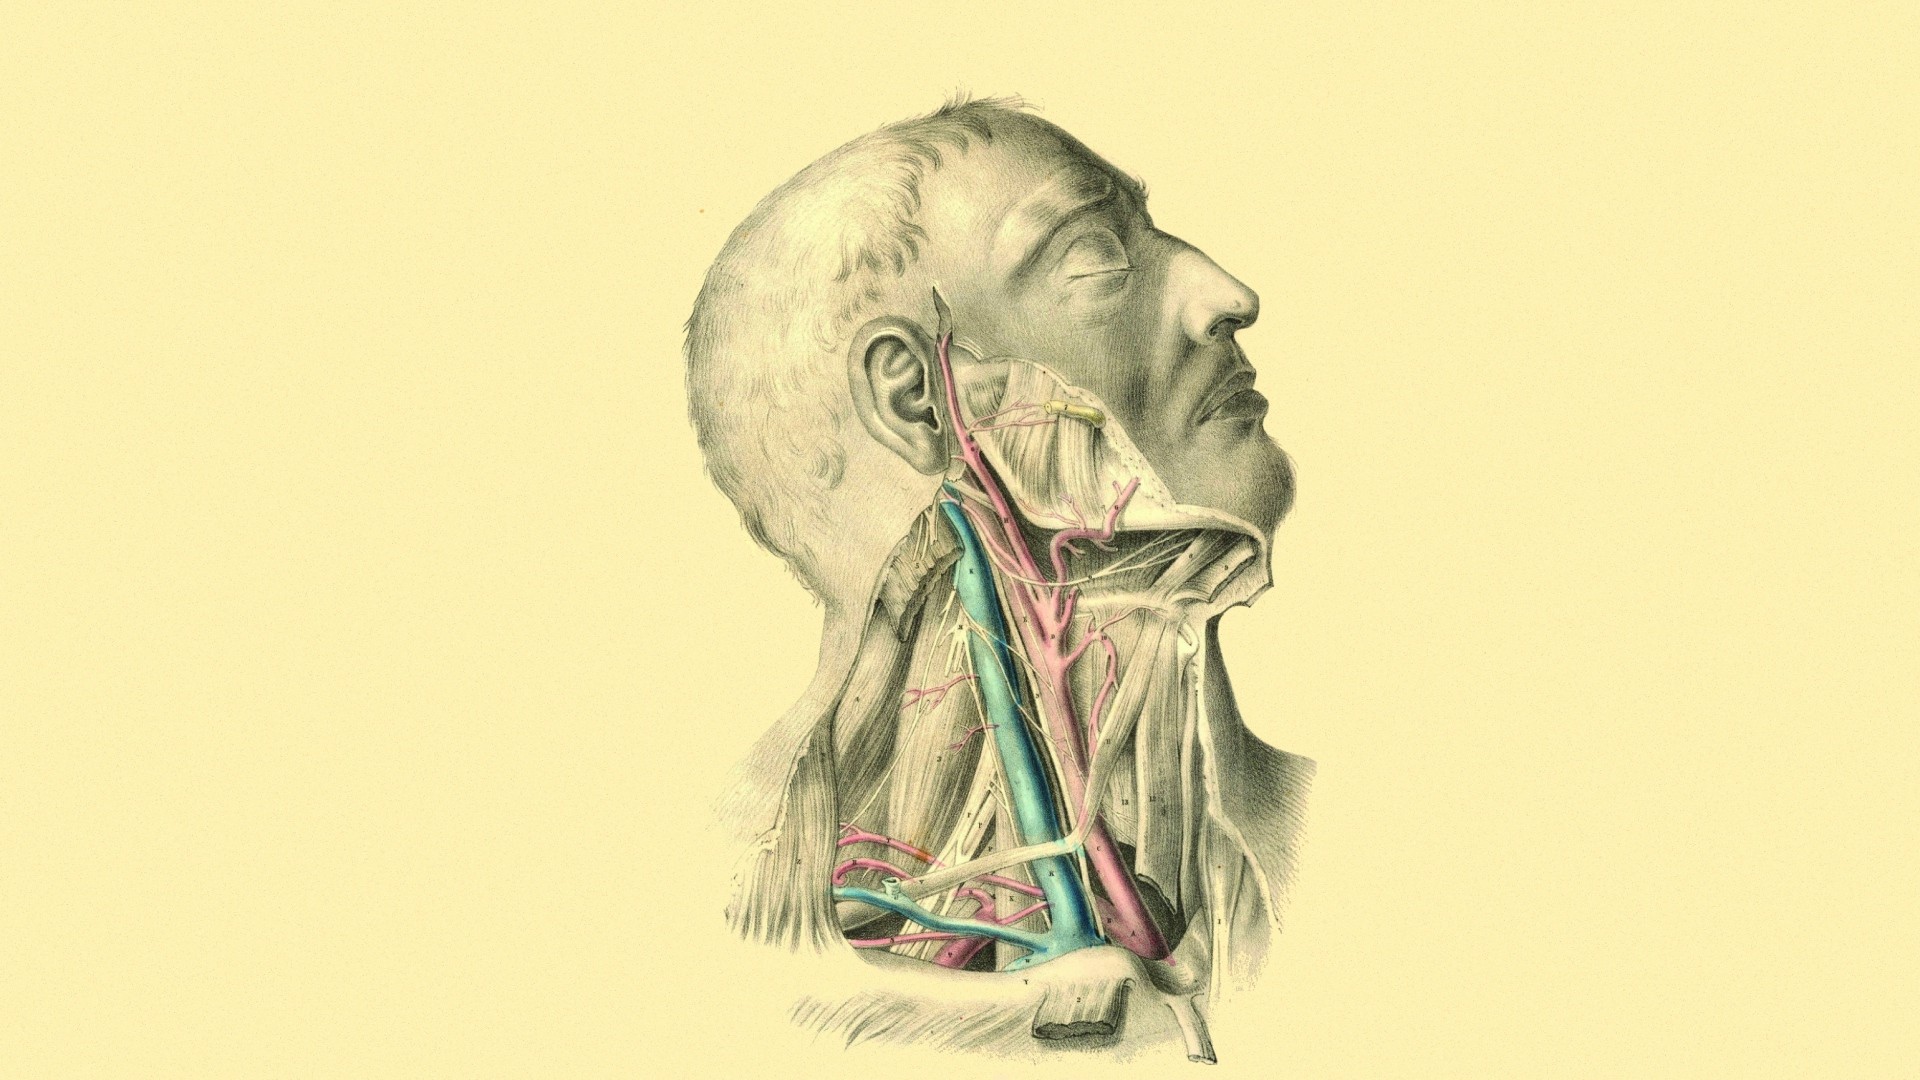 General 1920x1080 digital art minimalism men face artwork portrait veins drawing simple background anatomy muscles skin medicine